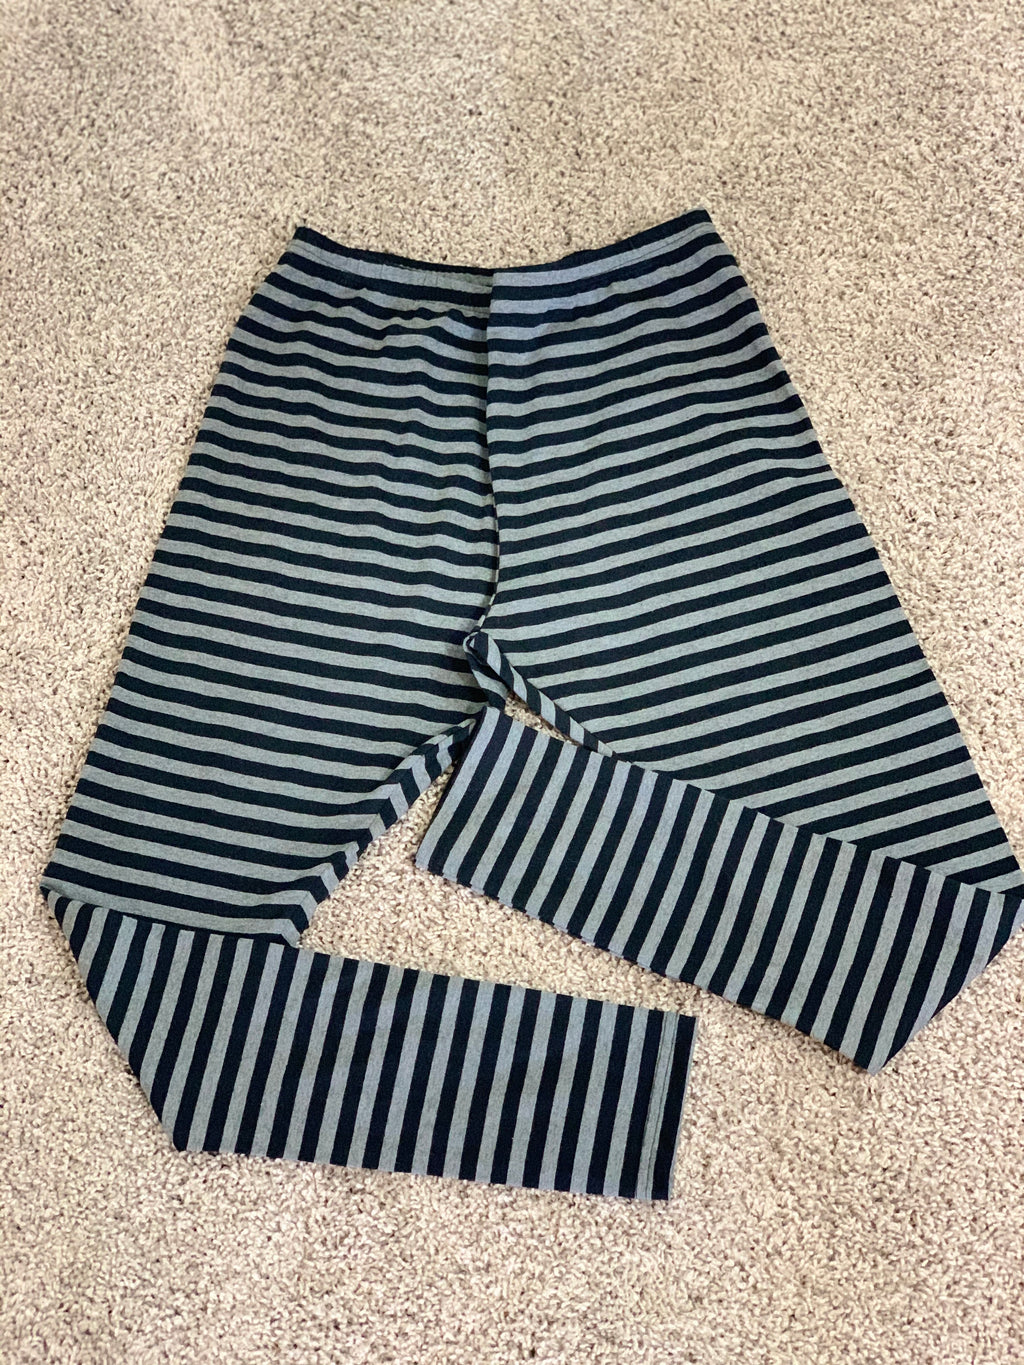 Black and Grey striped leggings - Long